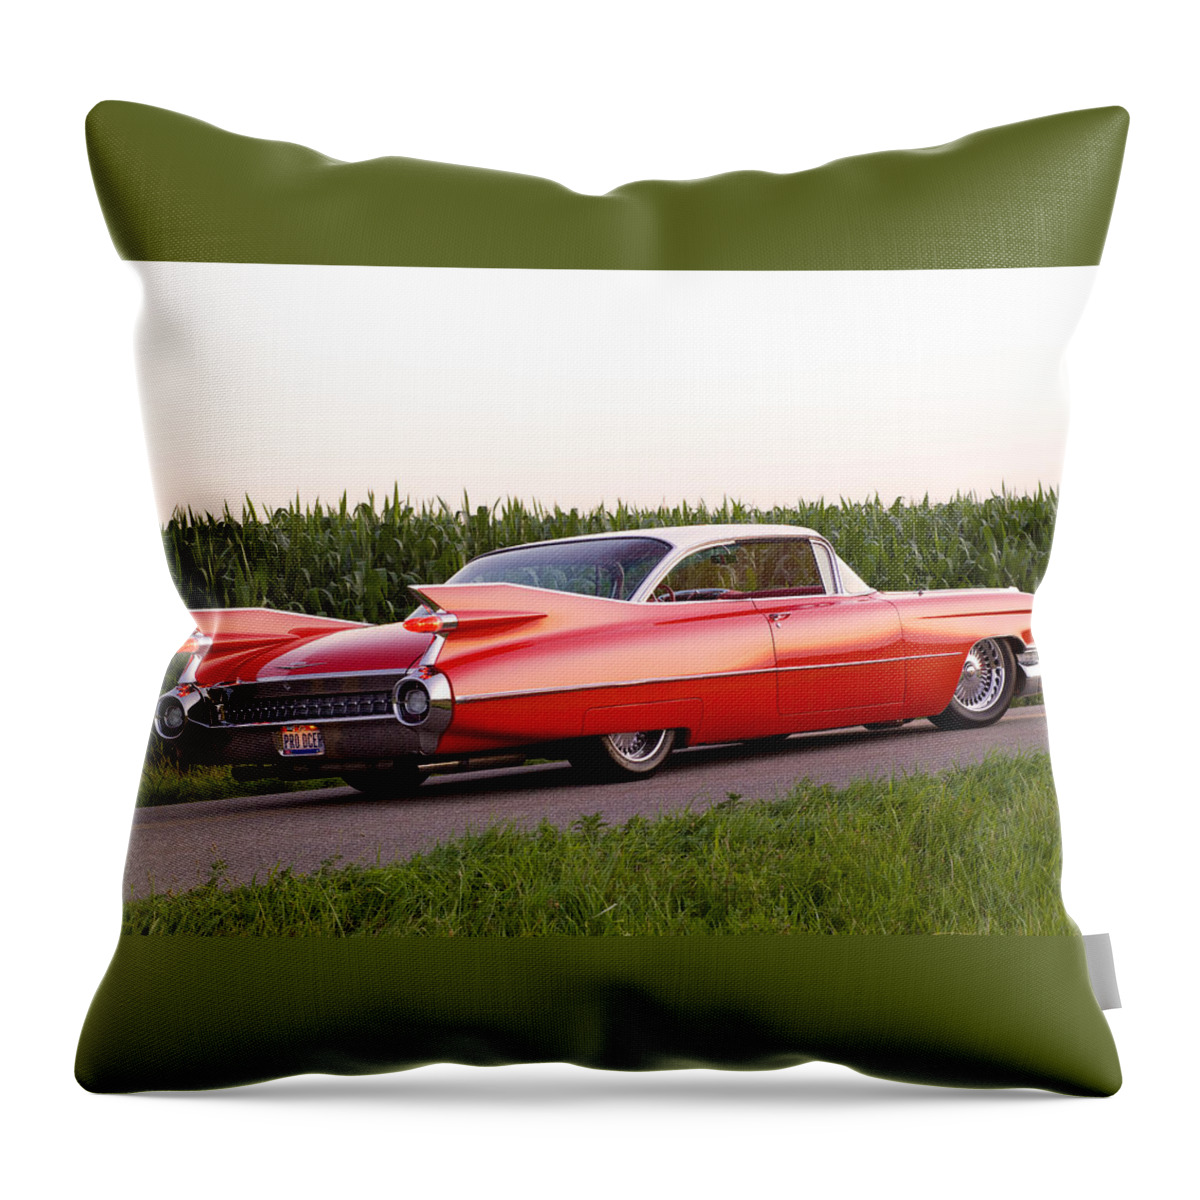 Cadillac Eldorado Throw Pillow featuring the photograph Cadillac Eldorado by Jackie Russo